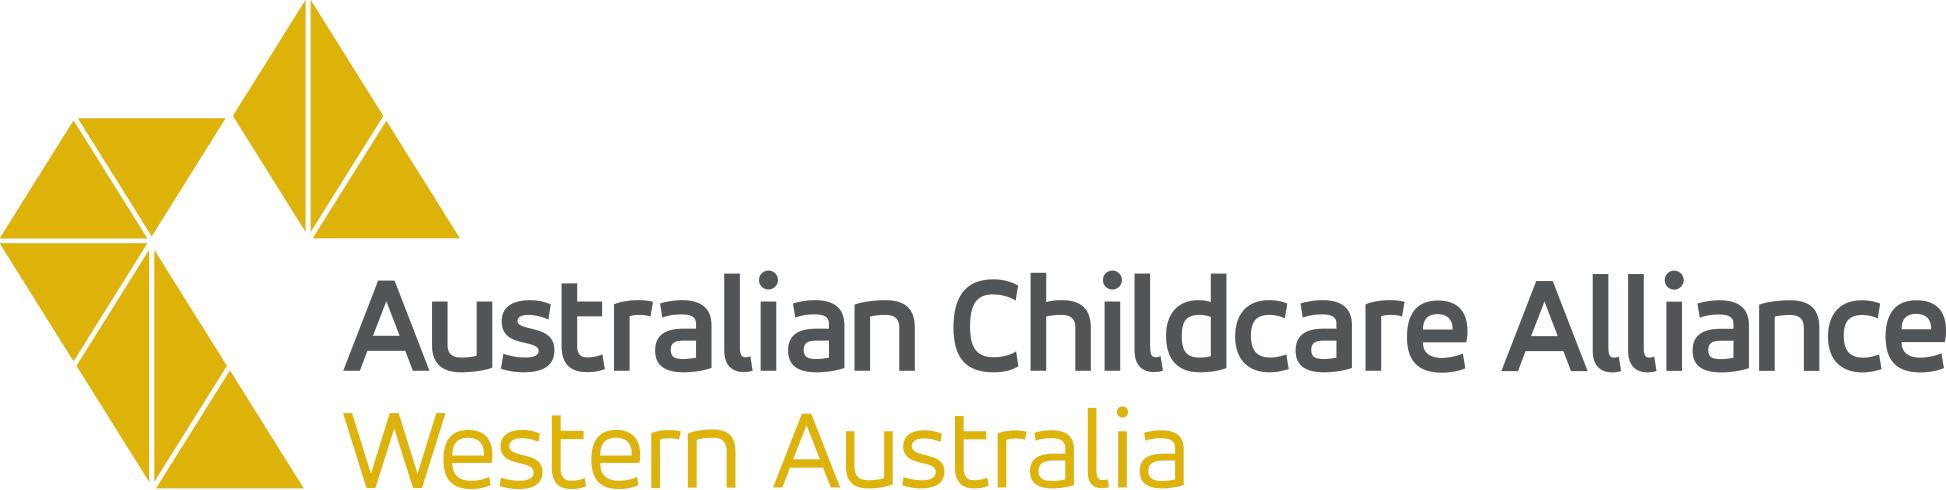 Australian Childcare Alliance WA